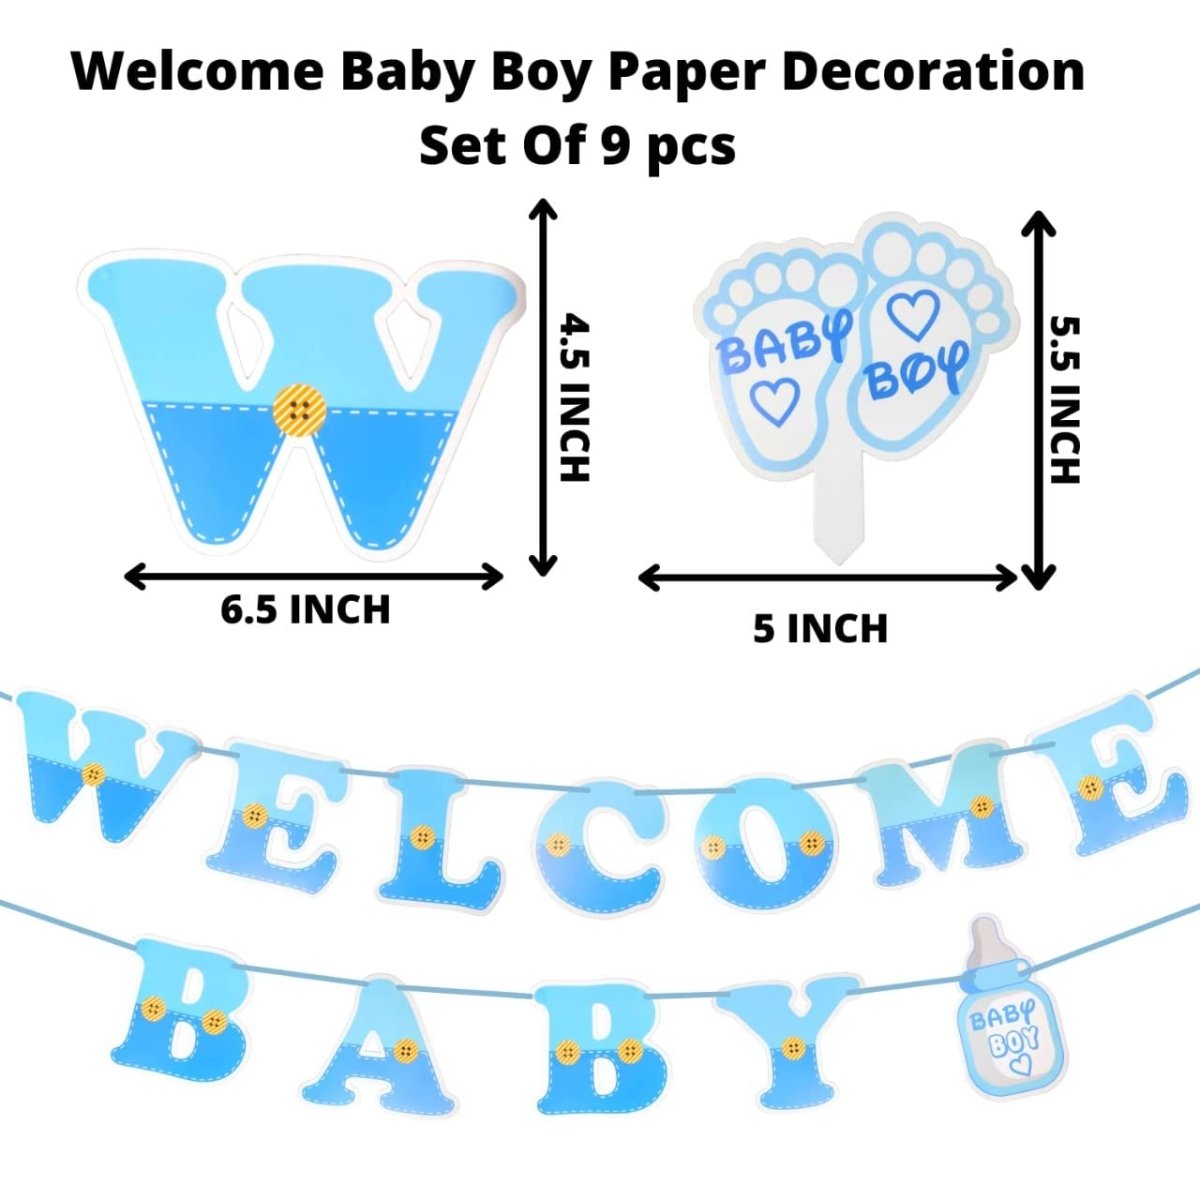 Online baby Boy Decoration Kit